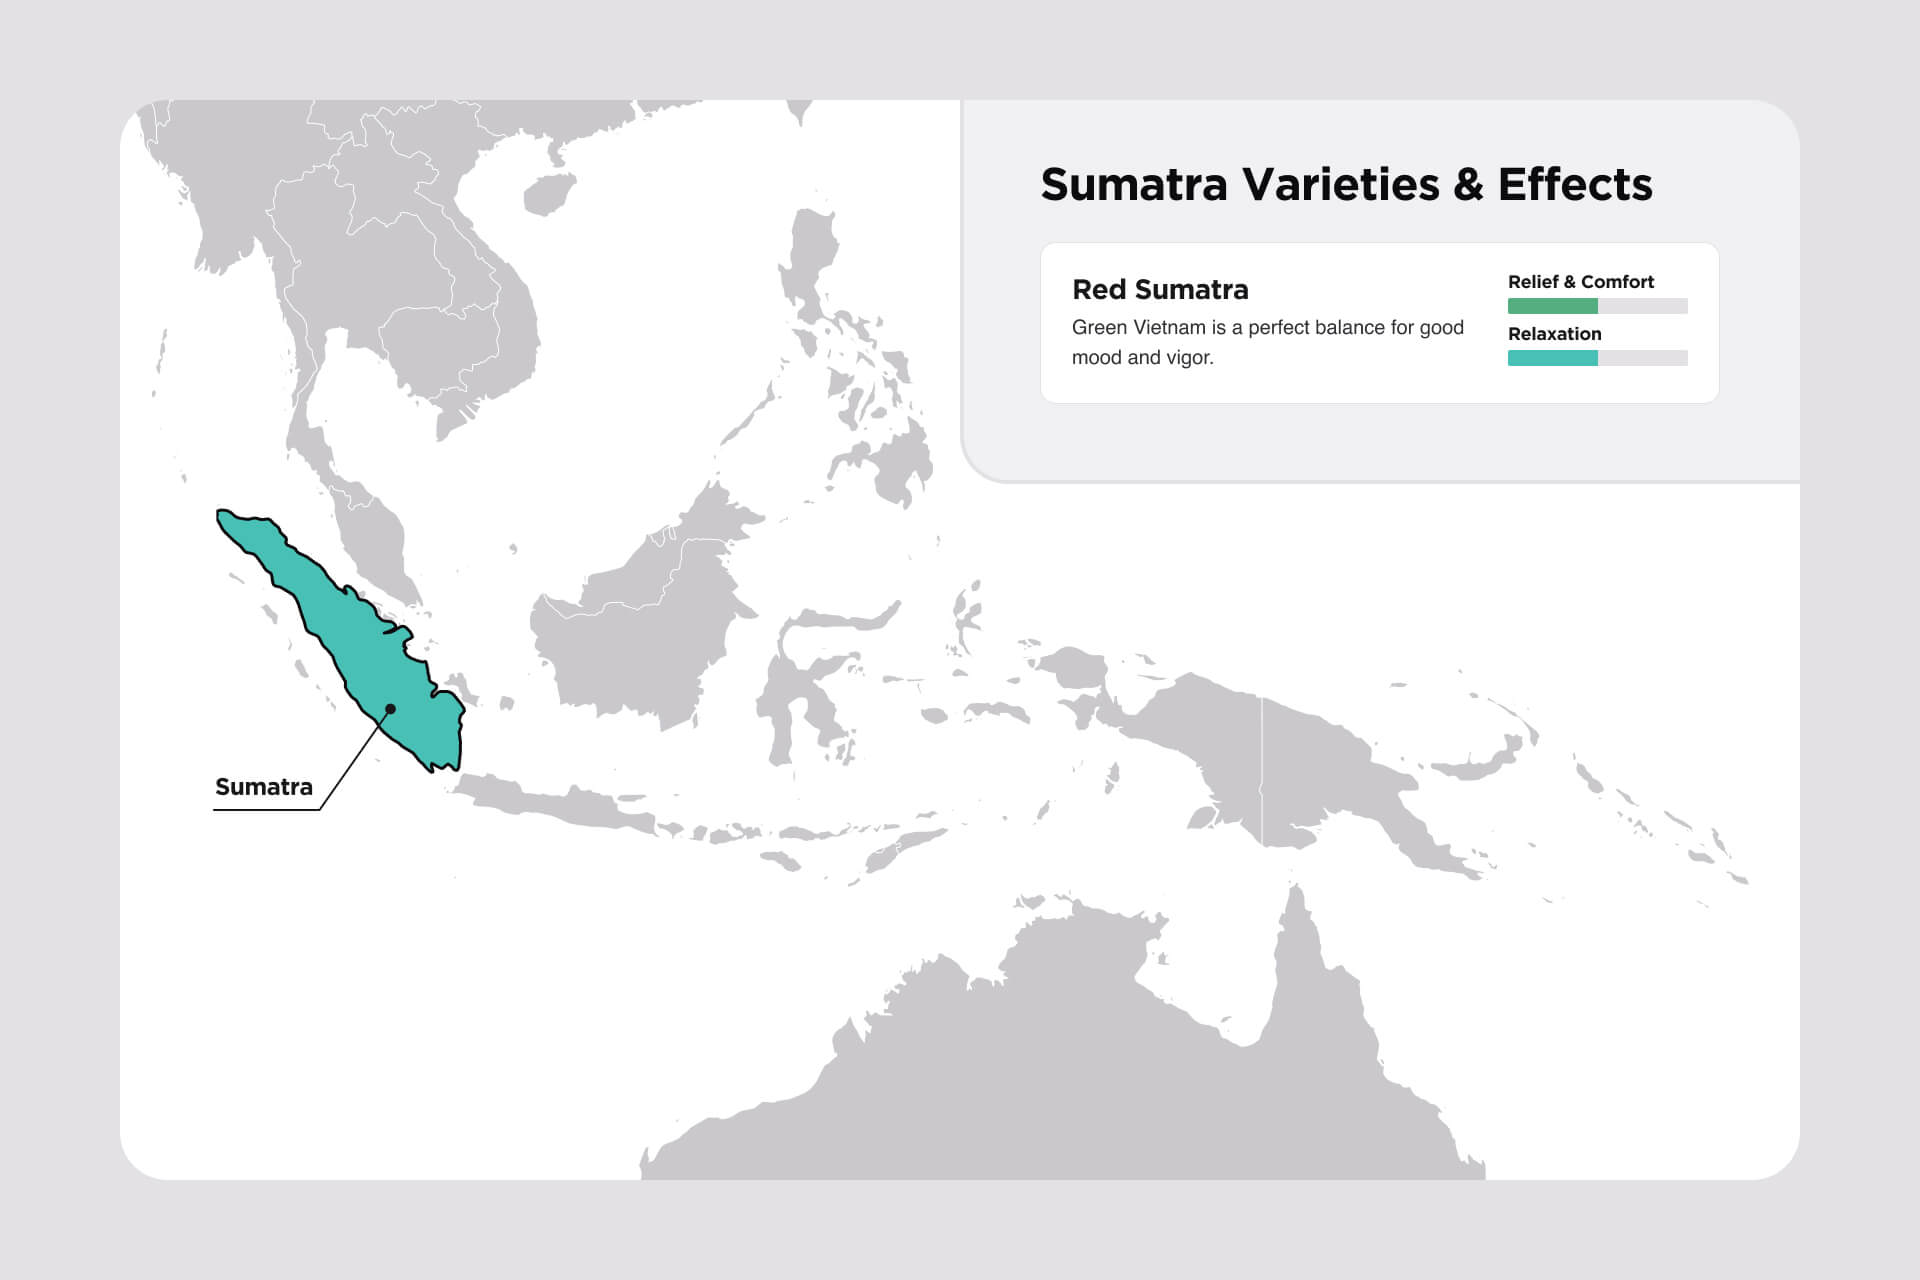 Sumatra kratom